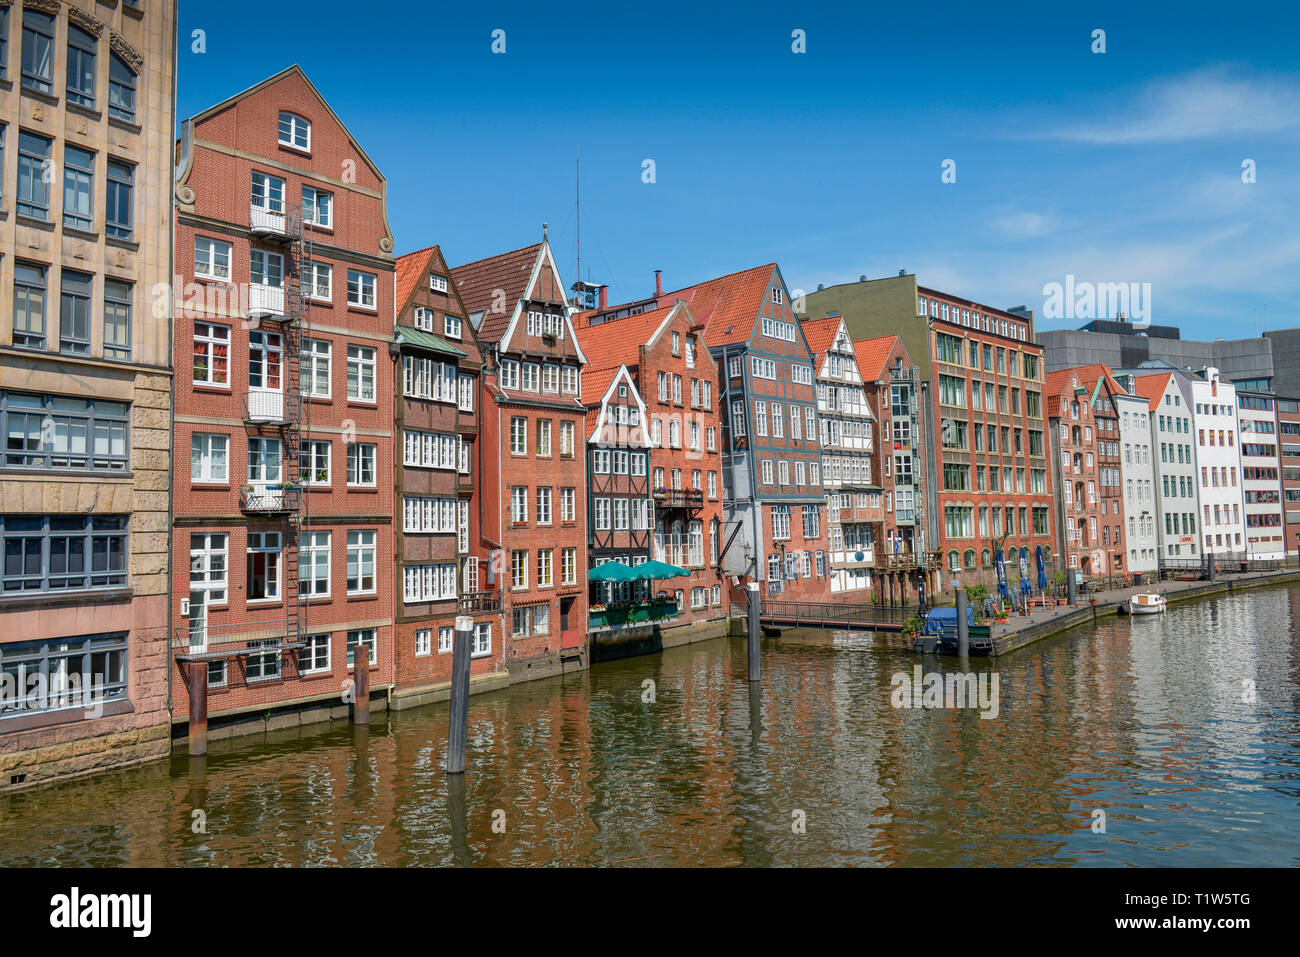 Buergerhaeuser, Deichstrasse, Nikolaifleet, Hamburgo, Alemania Foto de stock